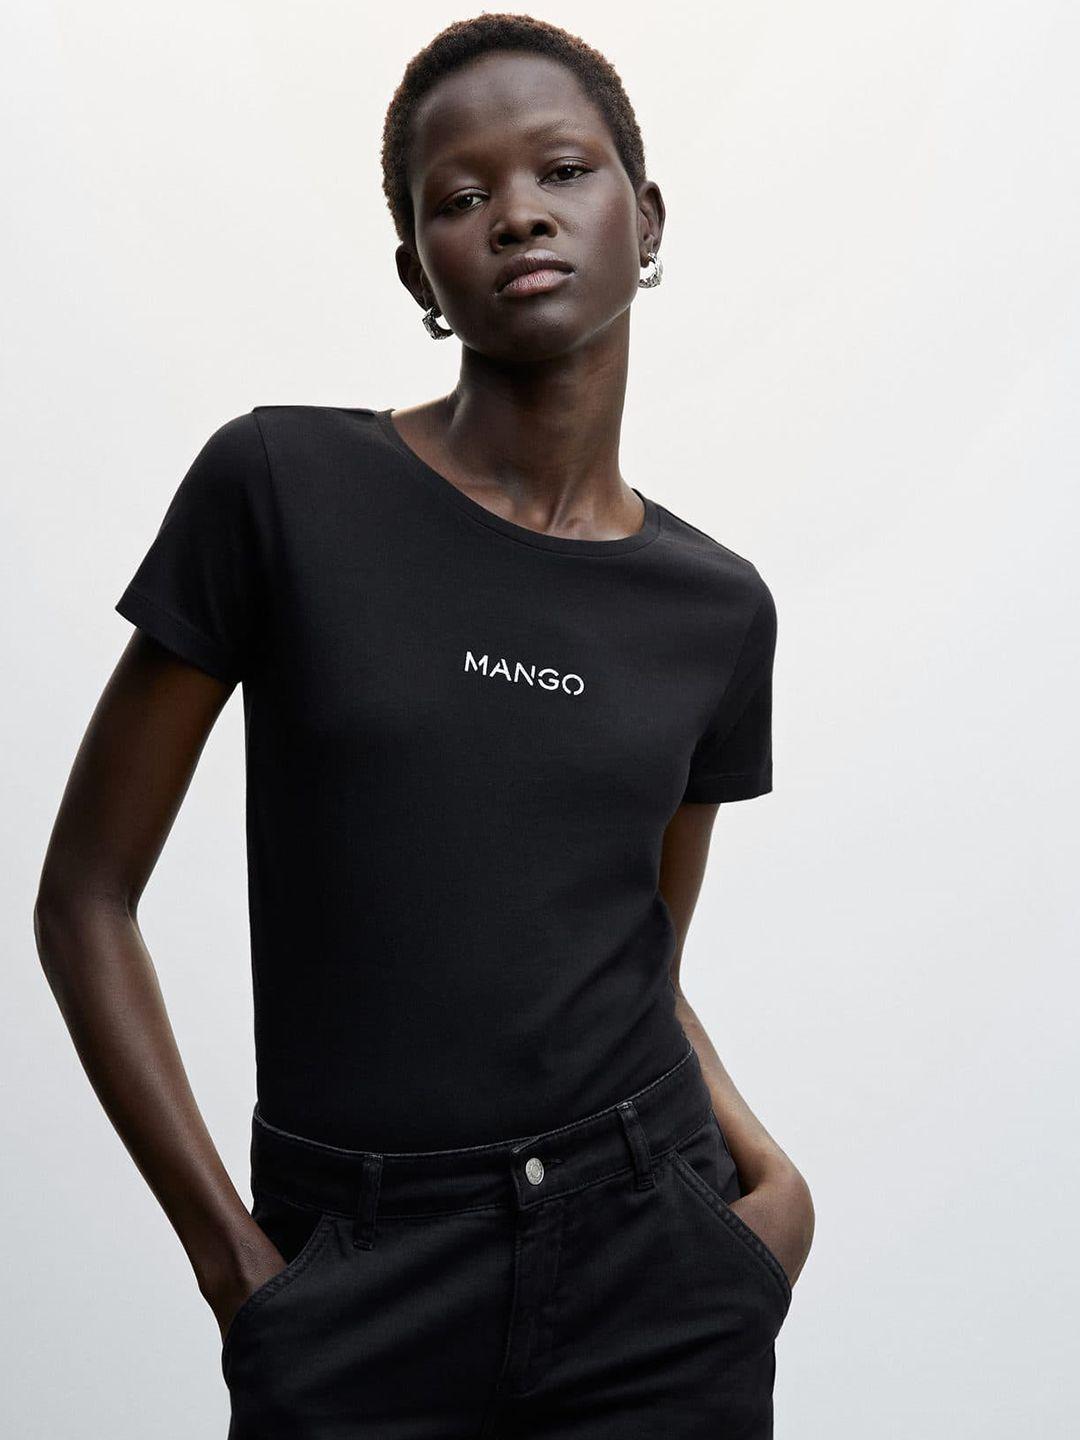 mango sustainable brand logo printed pure cotton t-shirt